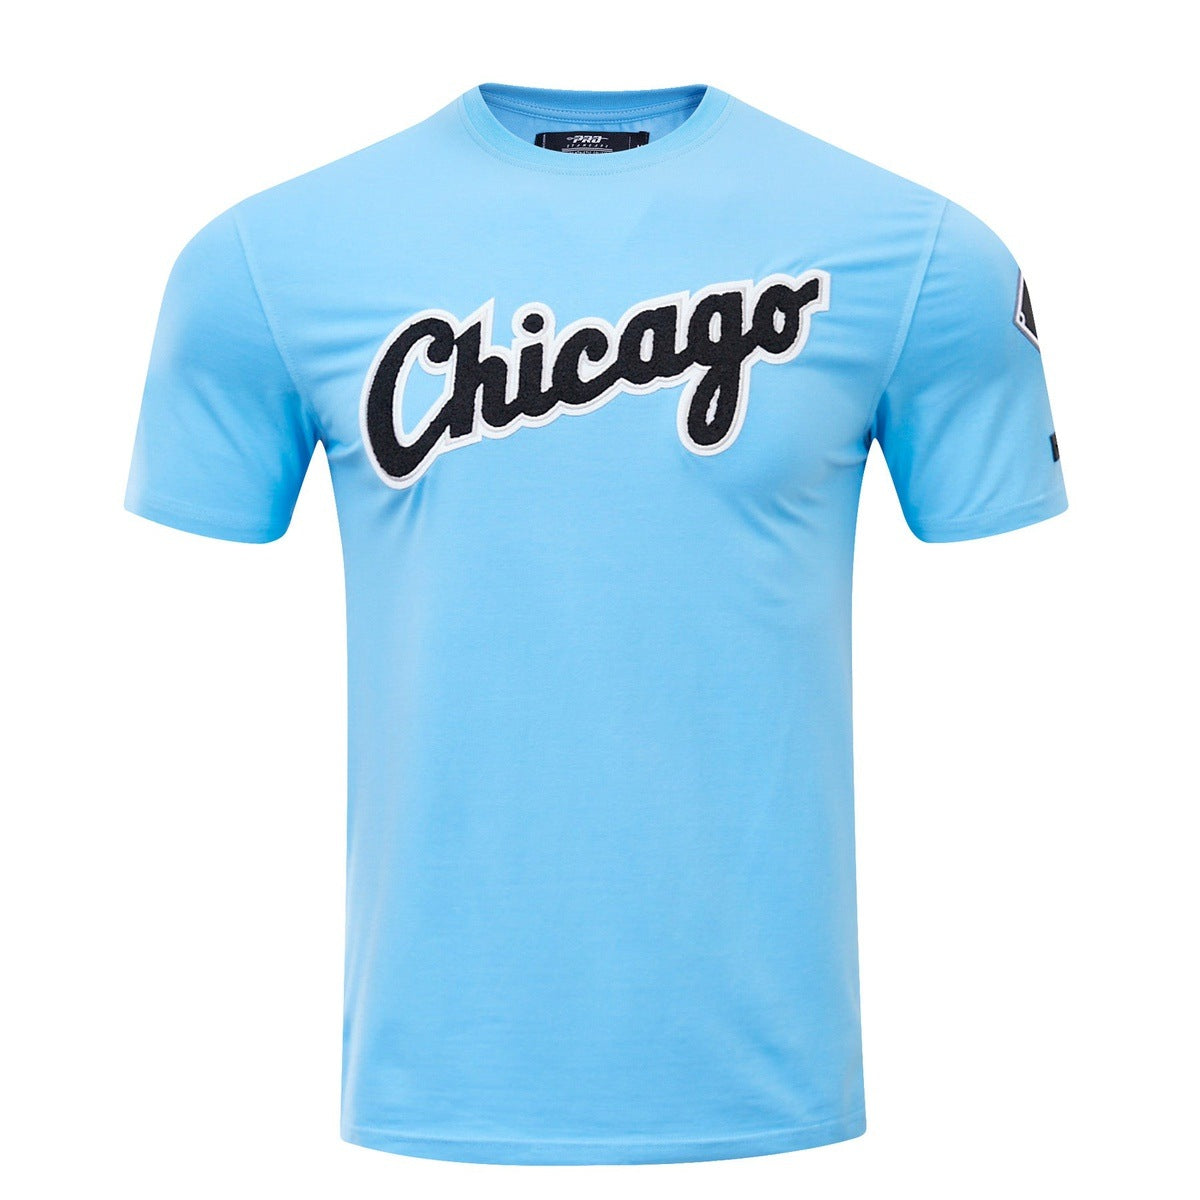 MLB CHICAGO WHITE SOX CLASSIC CHENILLE MEN'S TOP (UNIVERSITY BLUE)